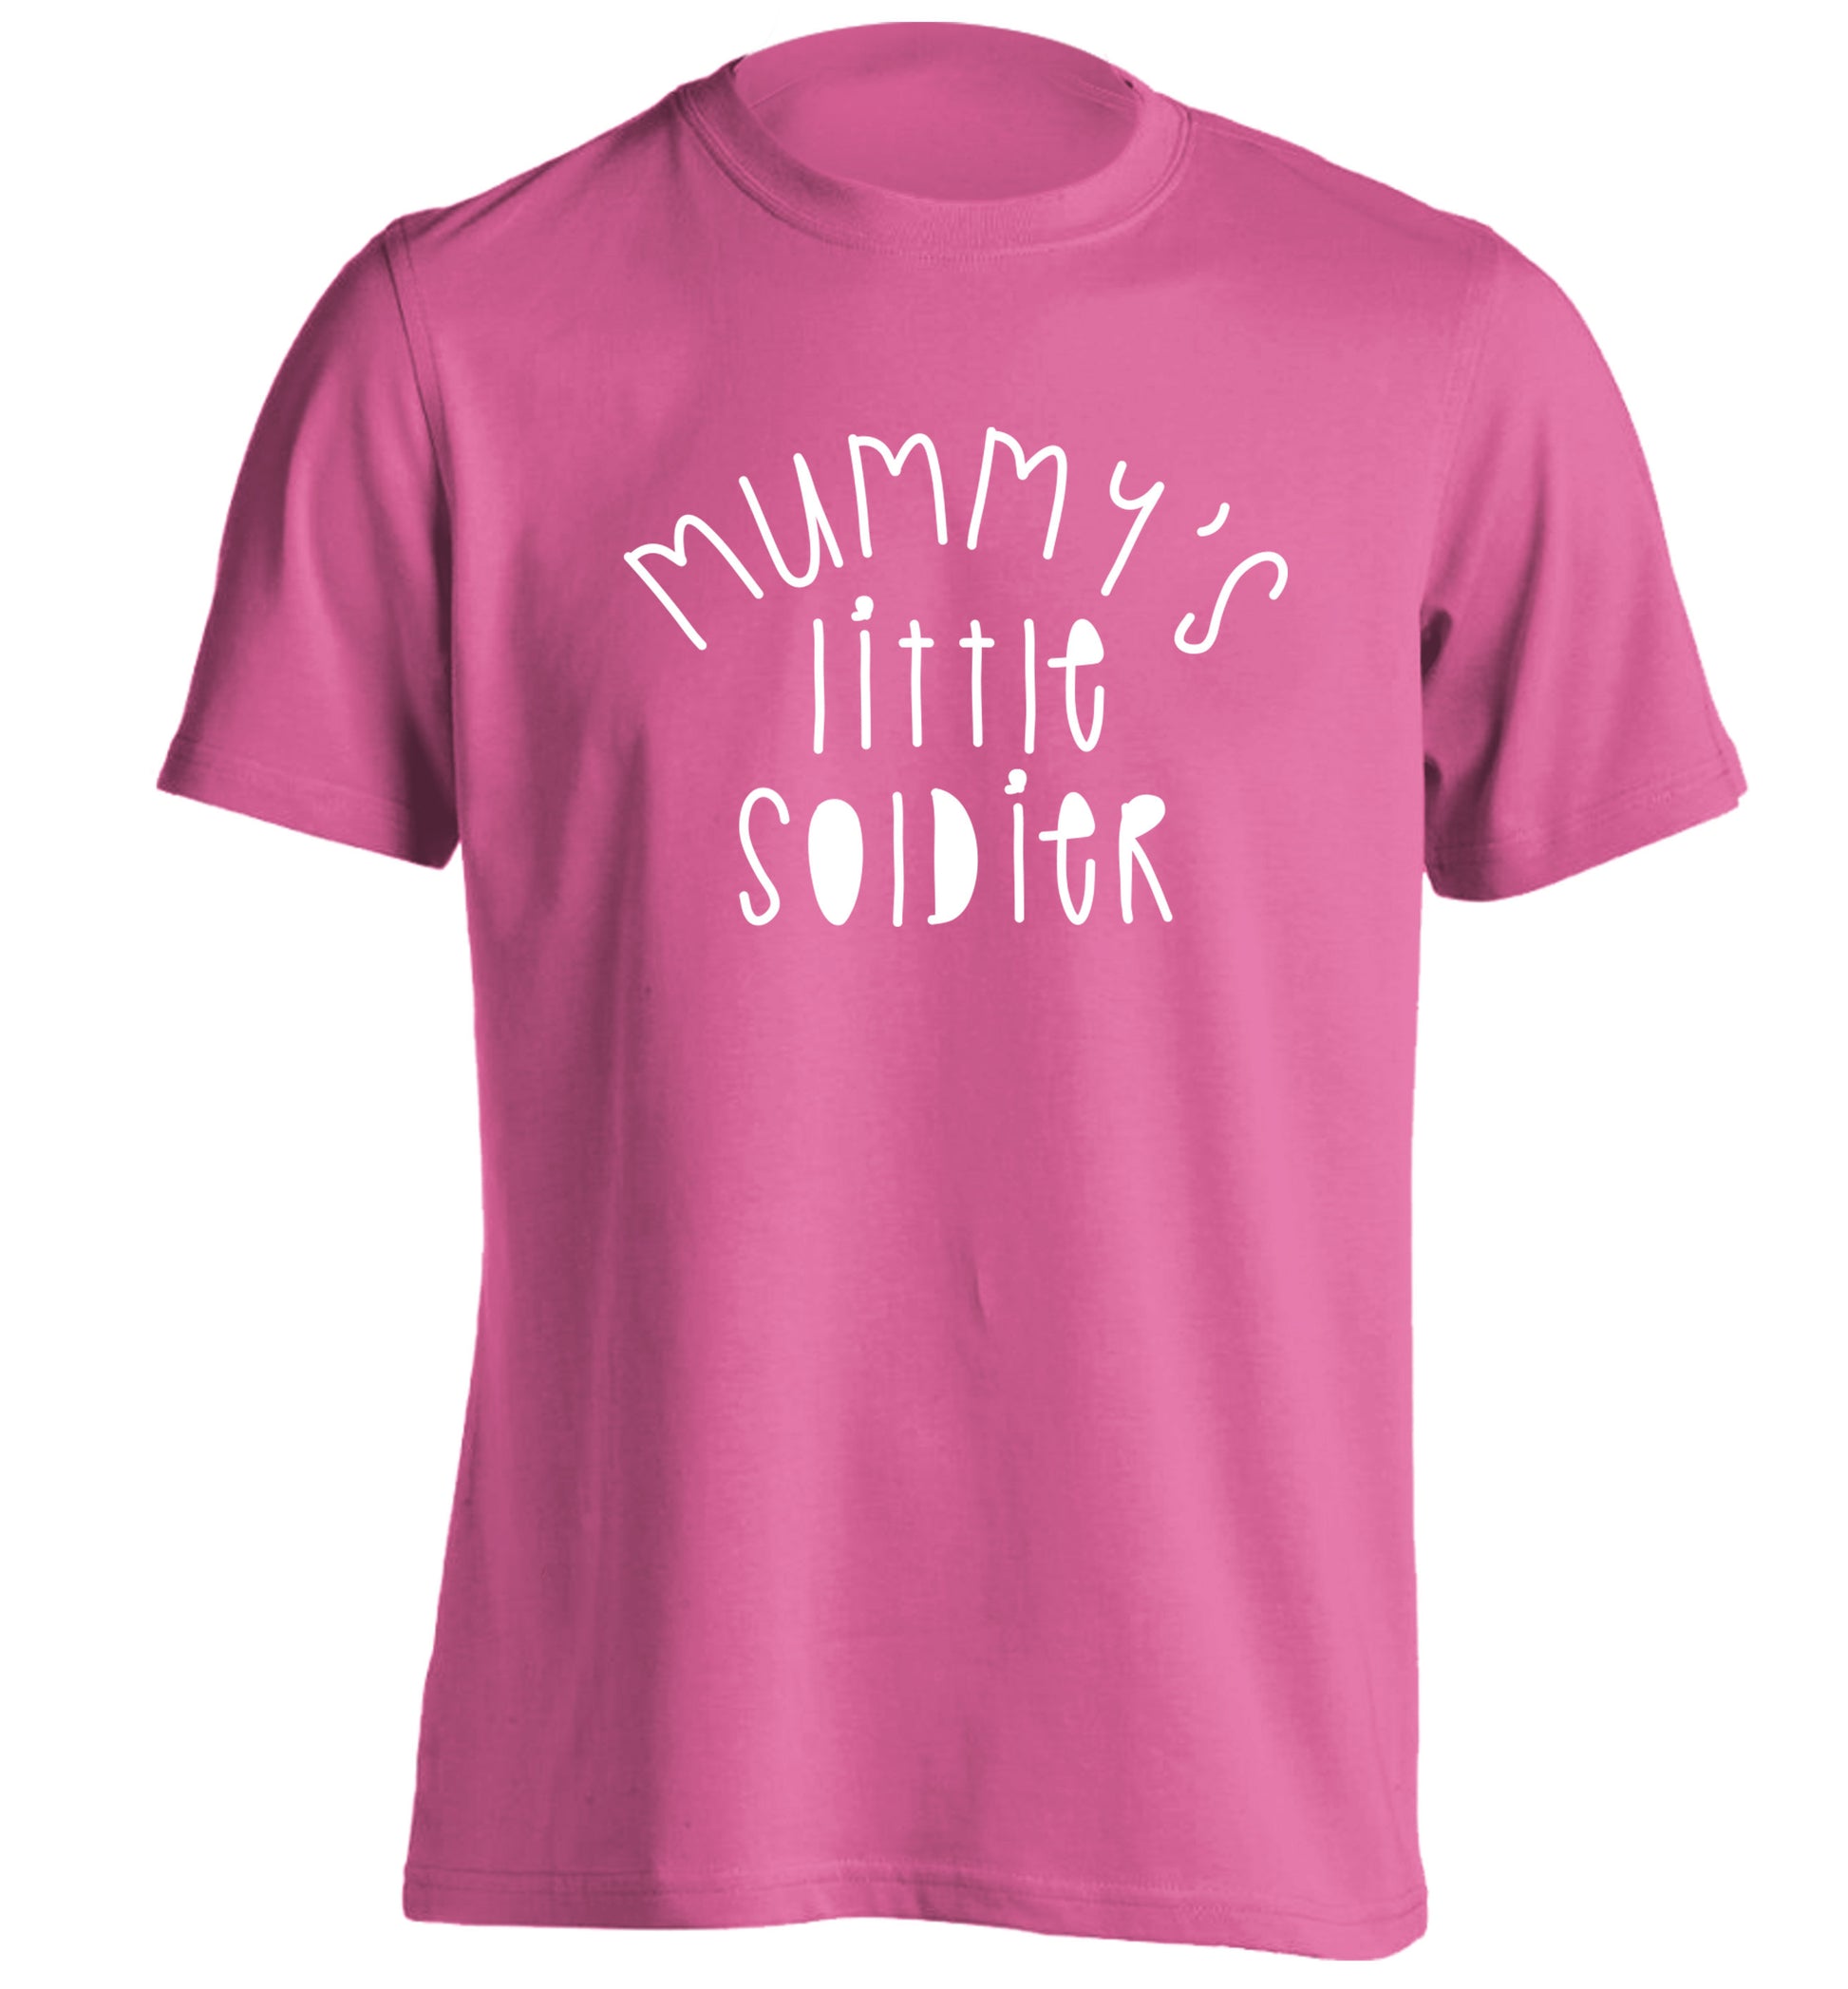 Mummy's little soldier adults unisex pink Tshirt 2XL